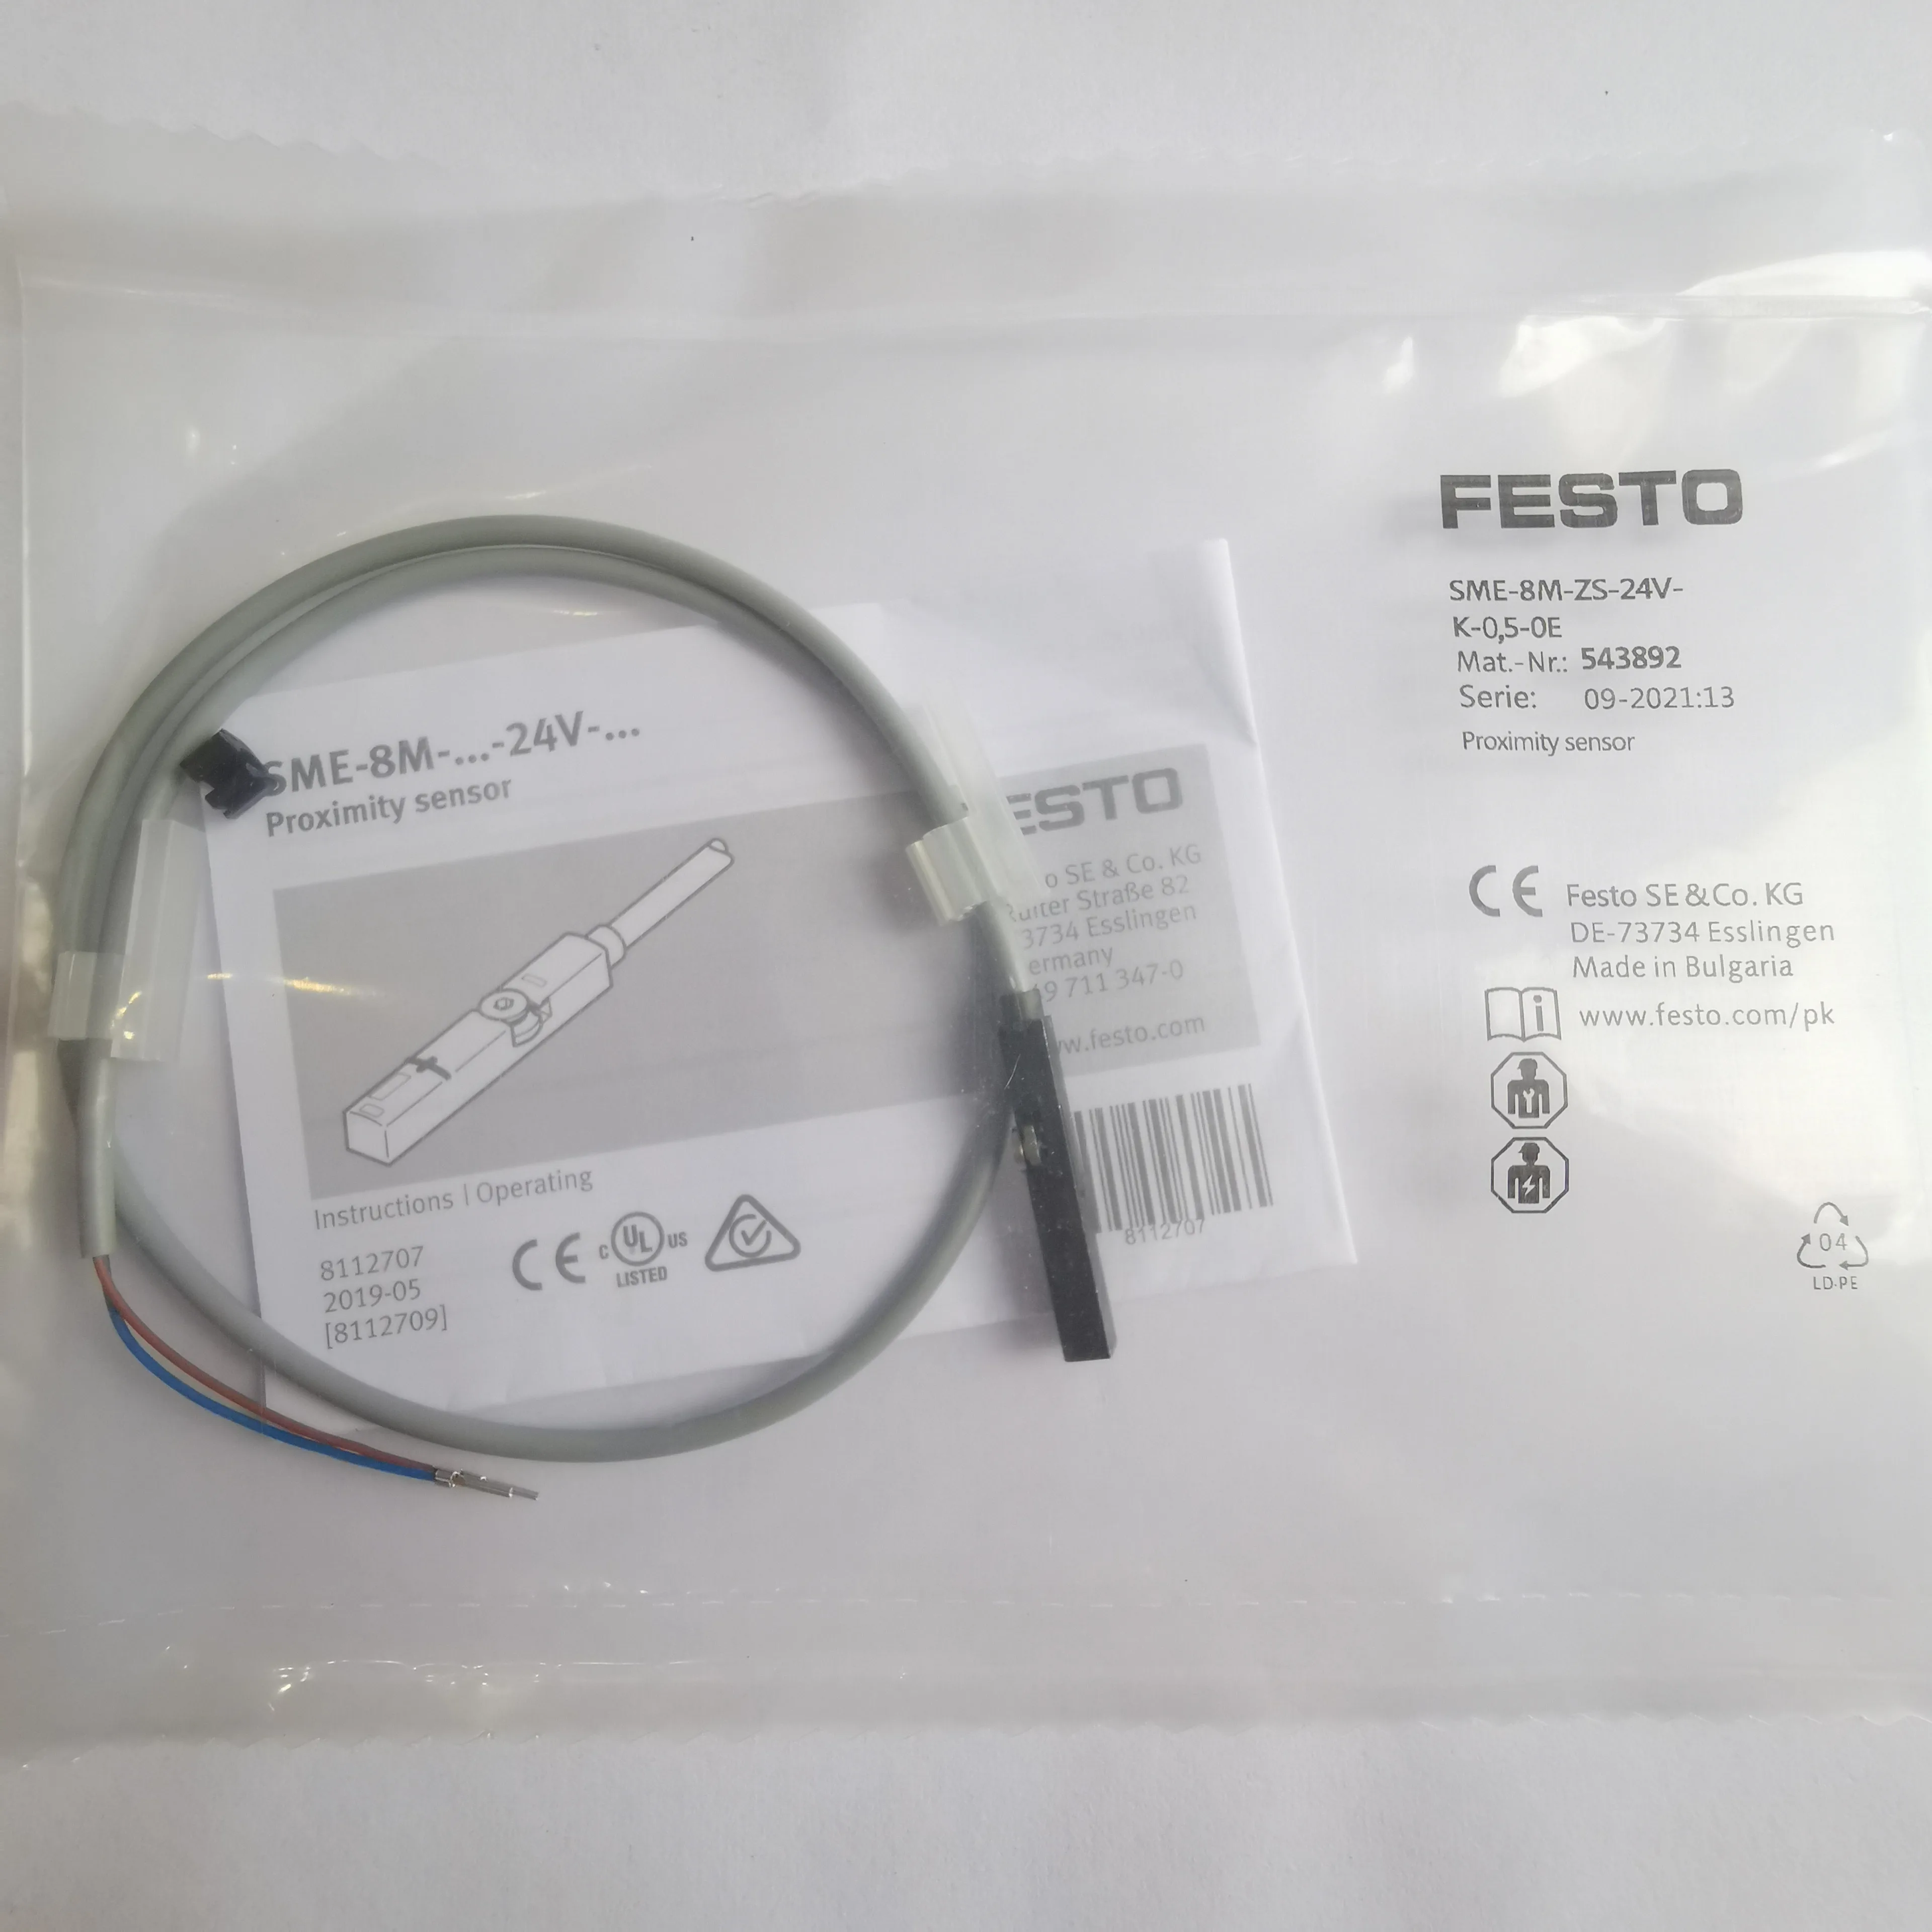 

Festo Sme-8m-zs-24v-k-0.5-oe 543892 (2-core 0.5m wire length) proximity switch Magnetic sensor